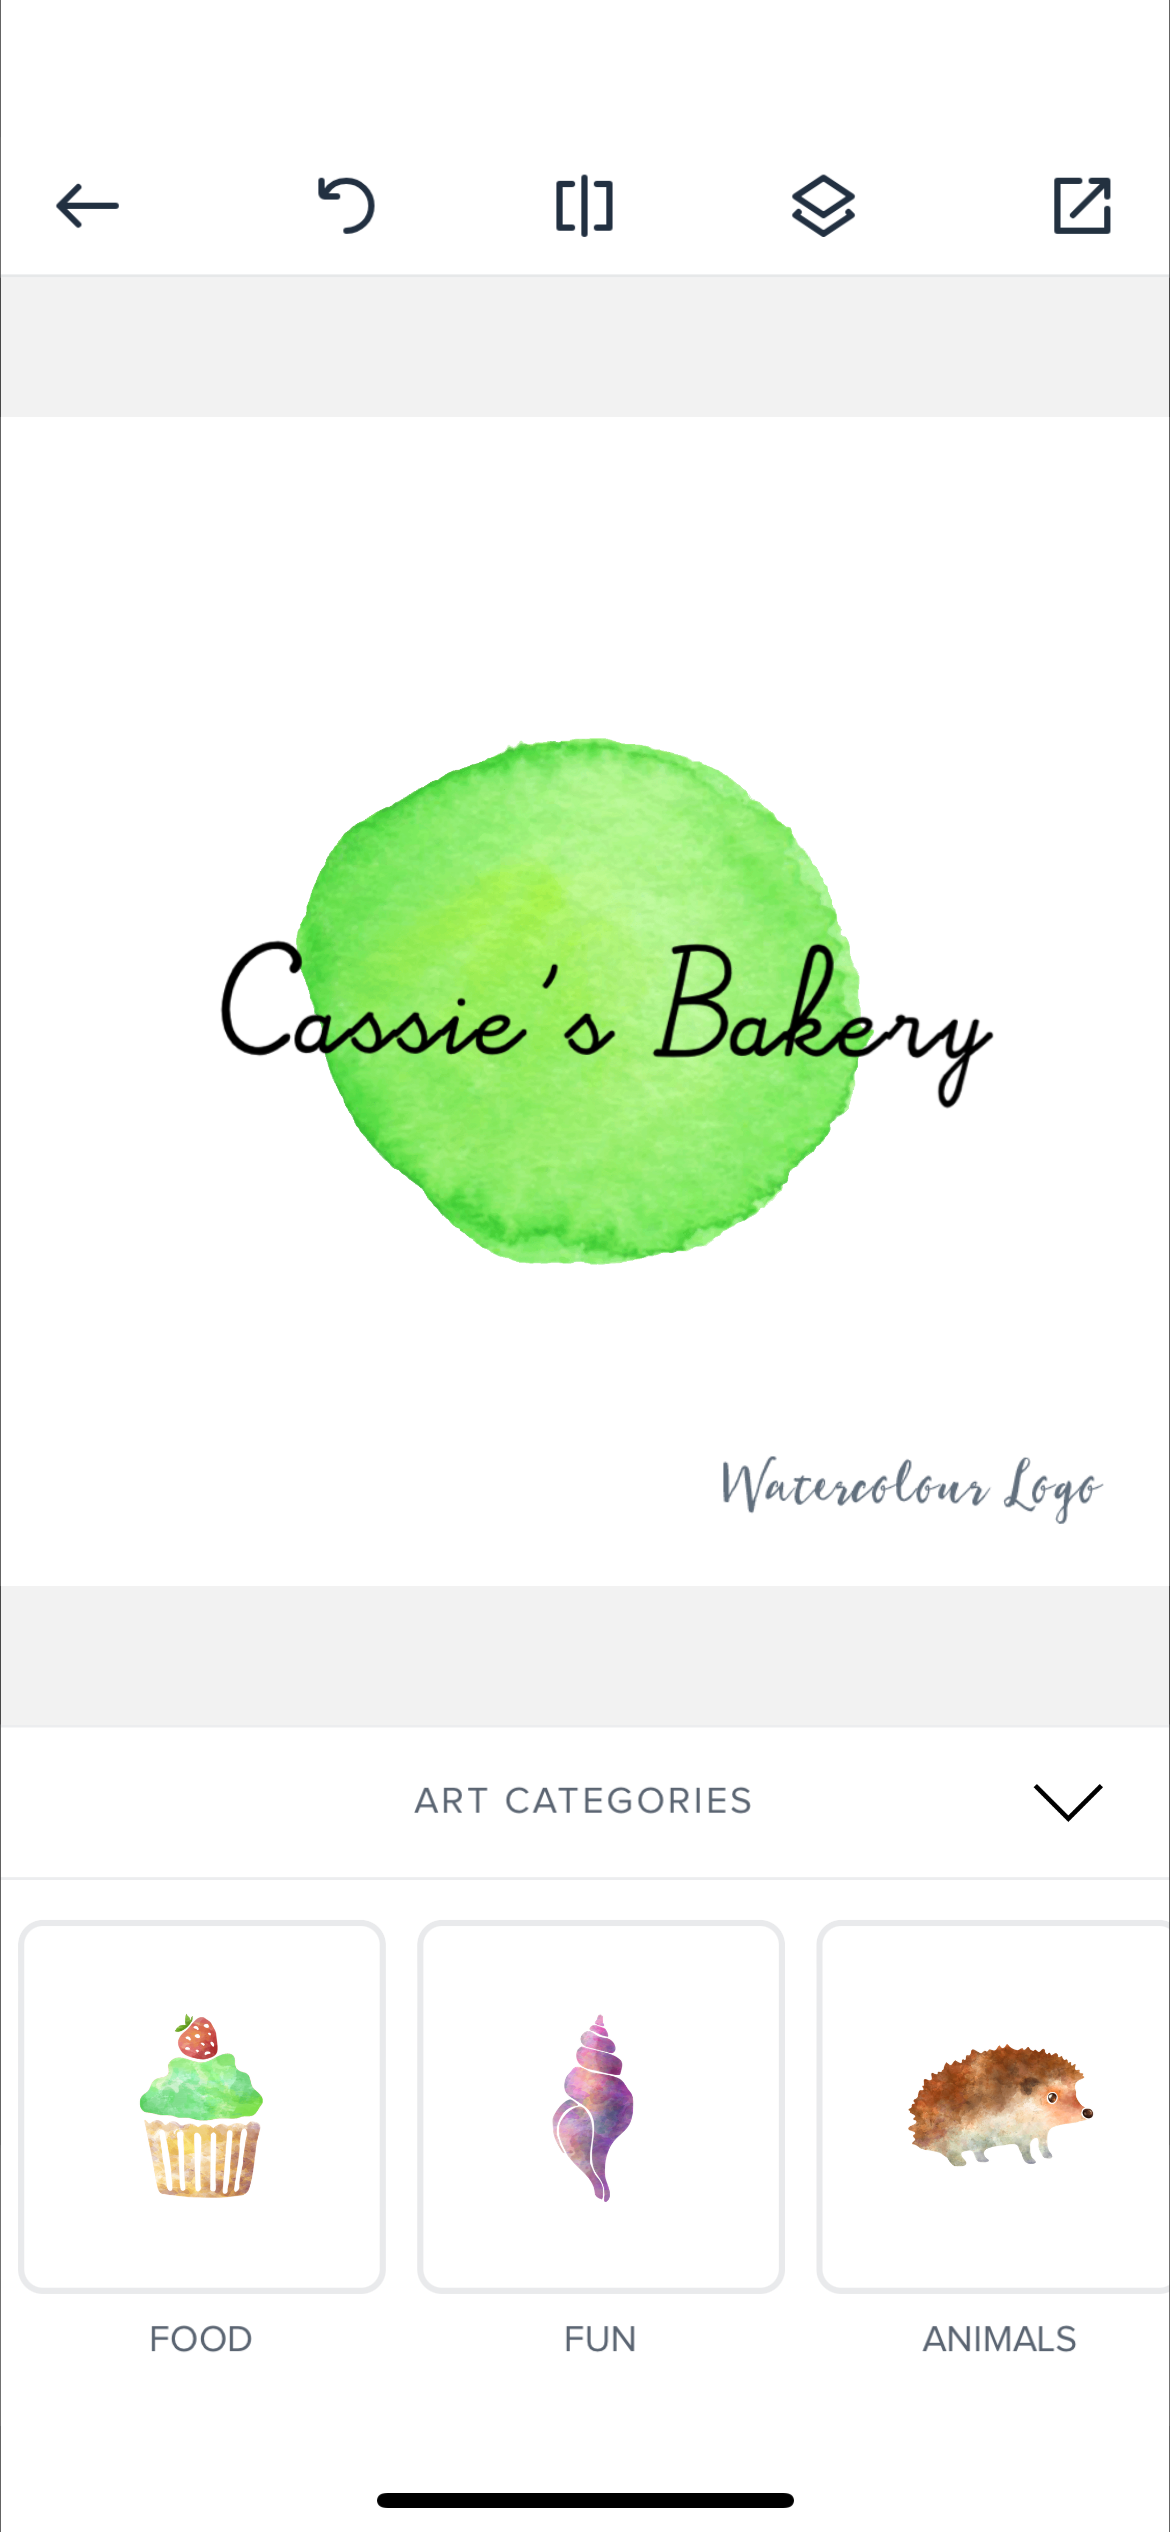 watercolor icons on watercolor logo app